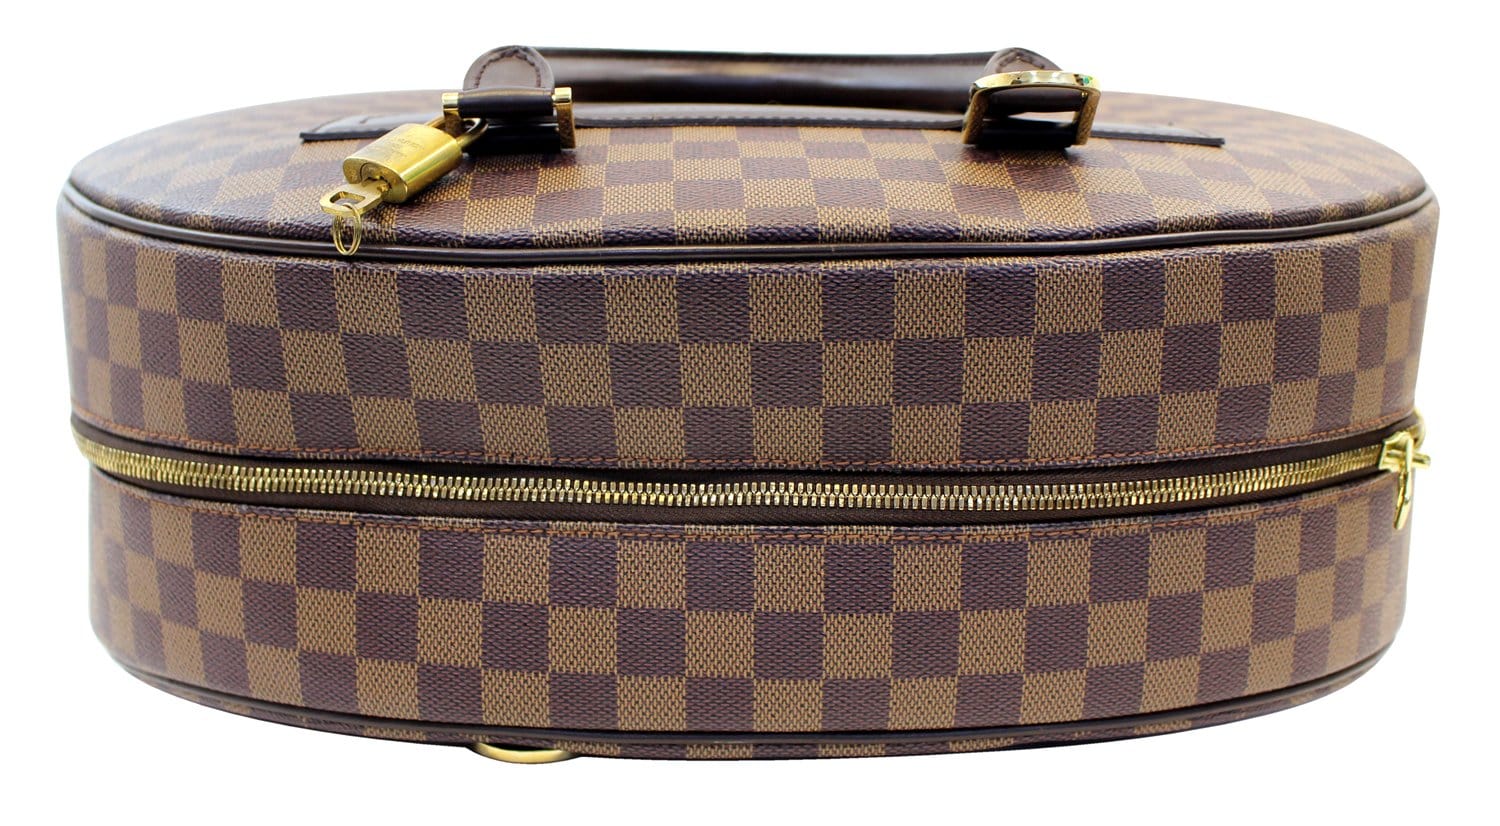 Louis Vuitton Nolita Damier Ebene Handbag - Farfetch